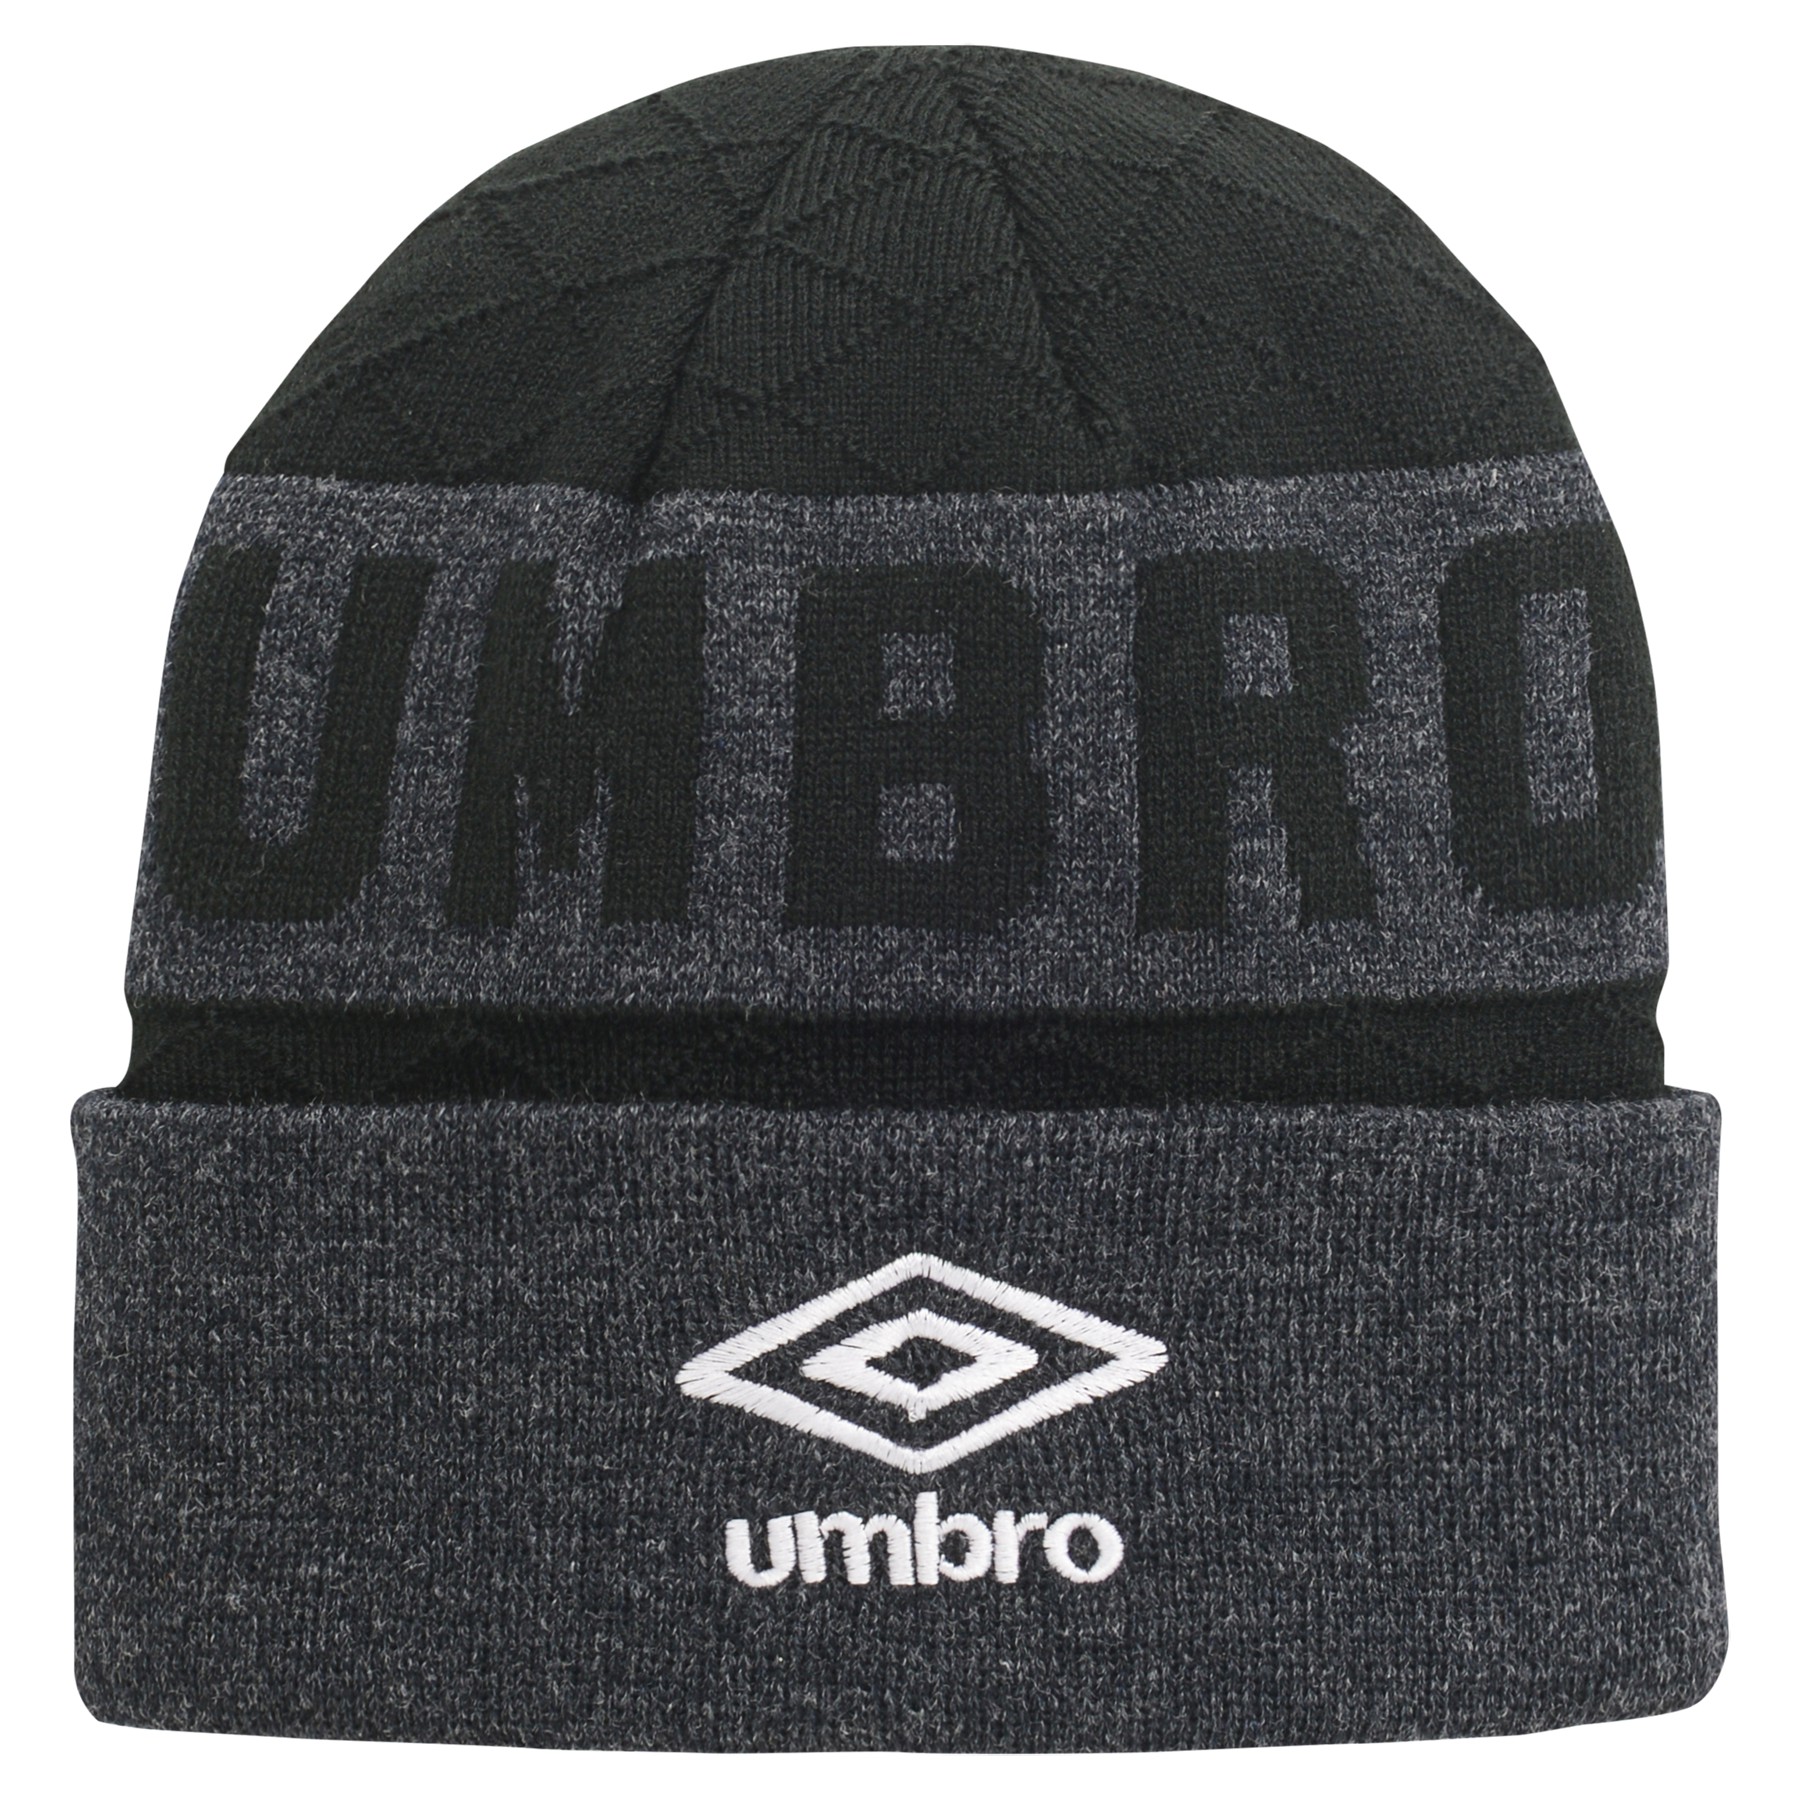 Umbro Men's Brocade Cuff Knit Winter Hat, Black/Dark Grey | eBay